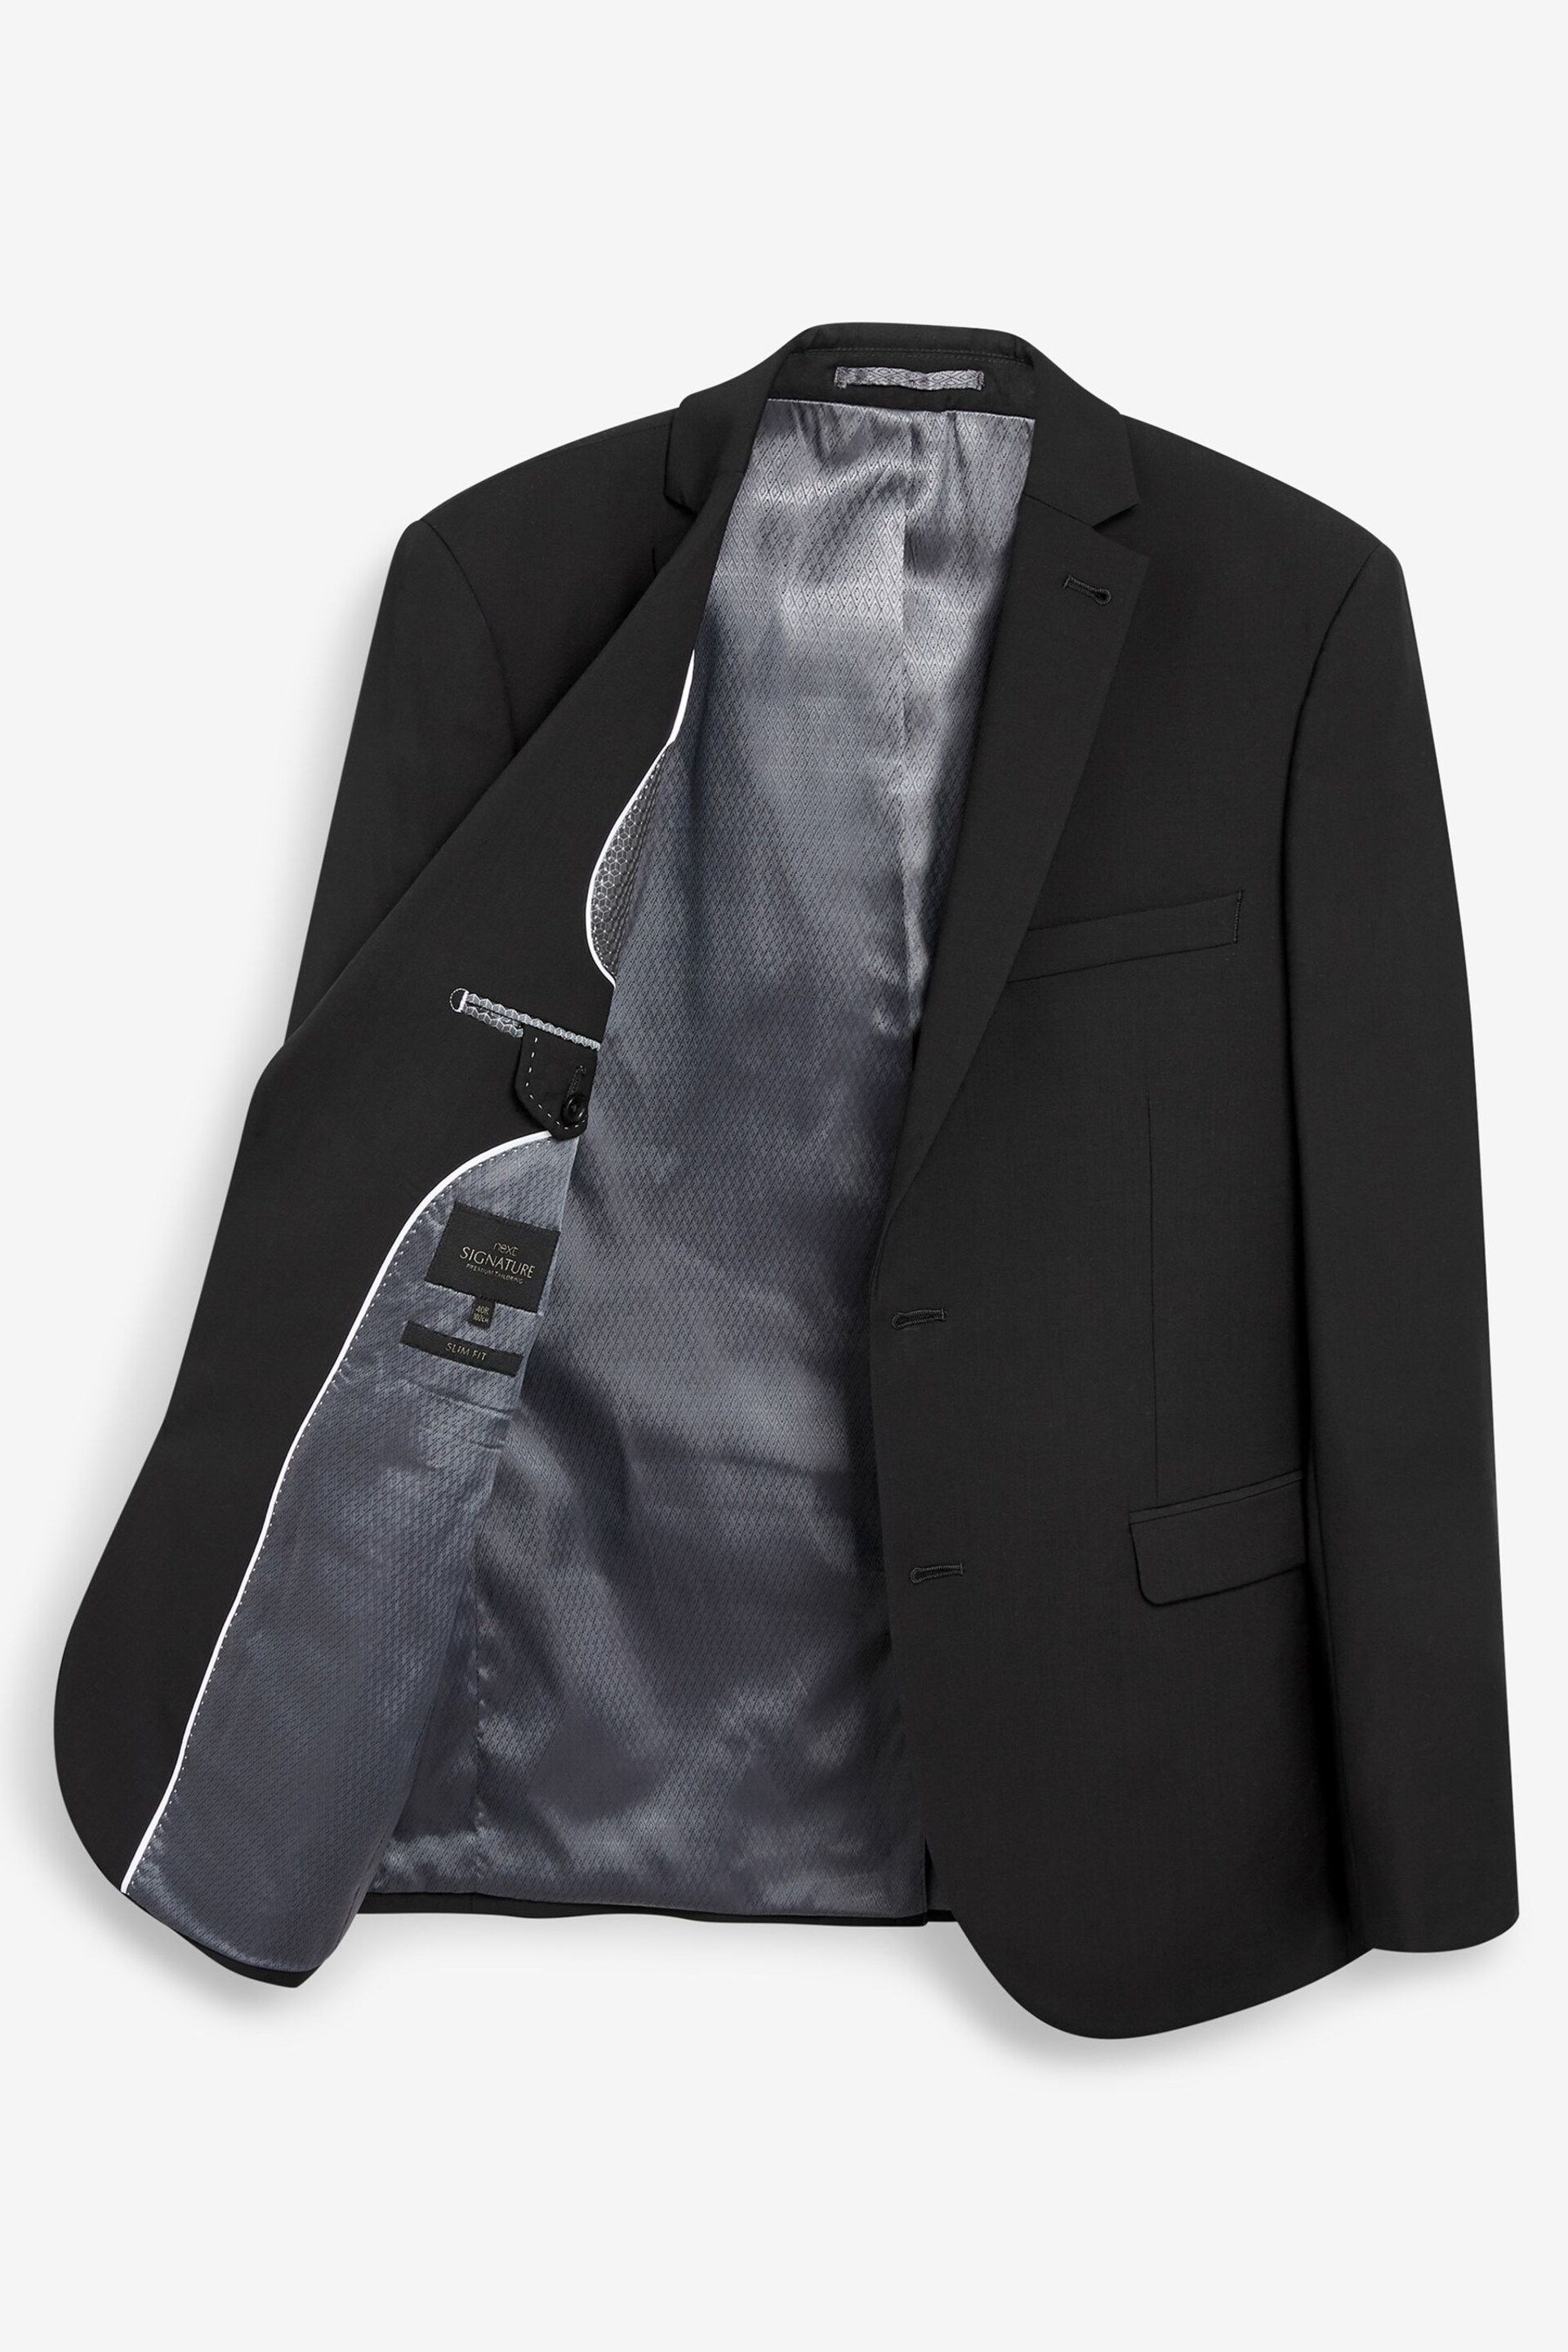 Black Slim Signature Tollegno Italian Wool Suit Jacket - Image 9 of 9